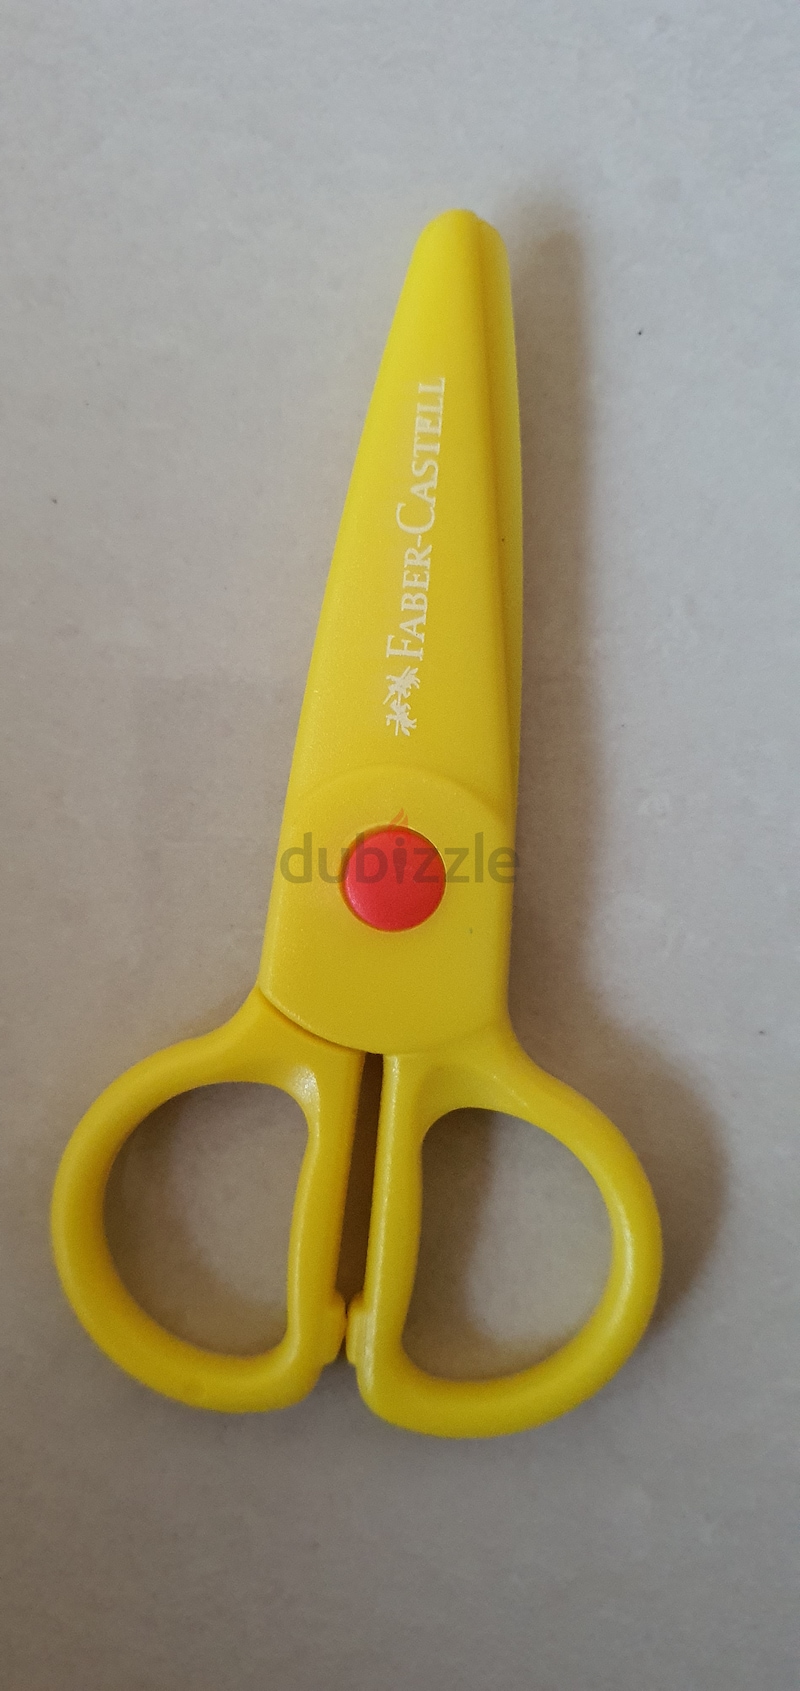 Faber-Castell Kids Safety Scissors